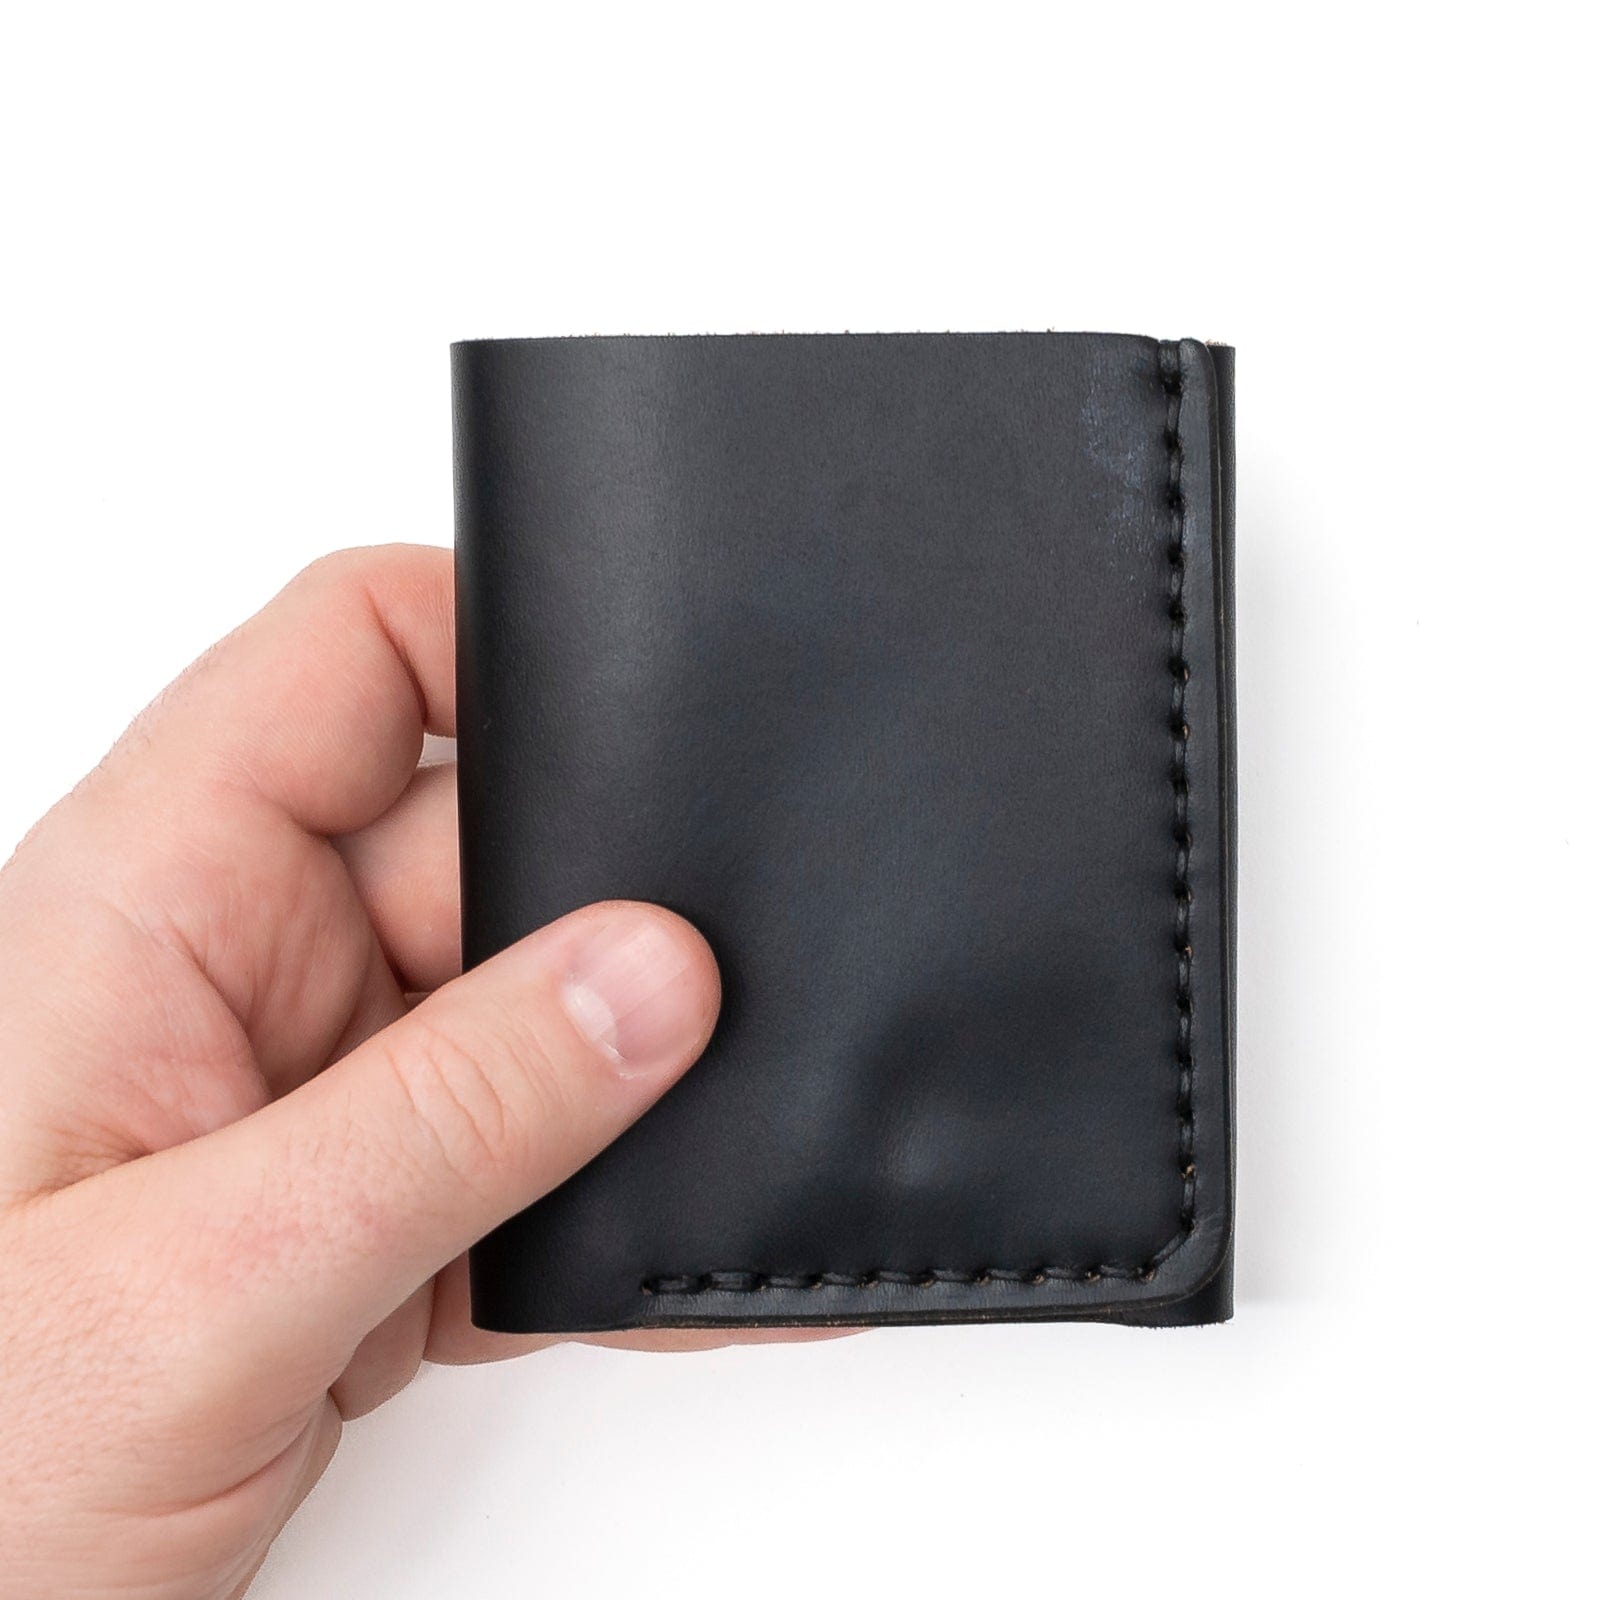 Black Leather Trifold Wallet: Compact, Elegant Design - Popov Leather®